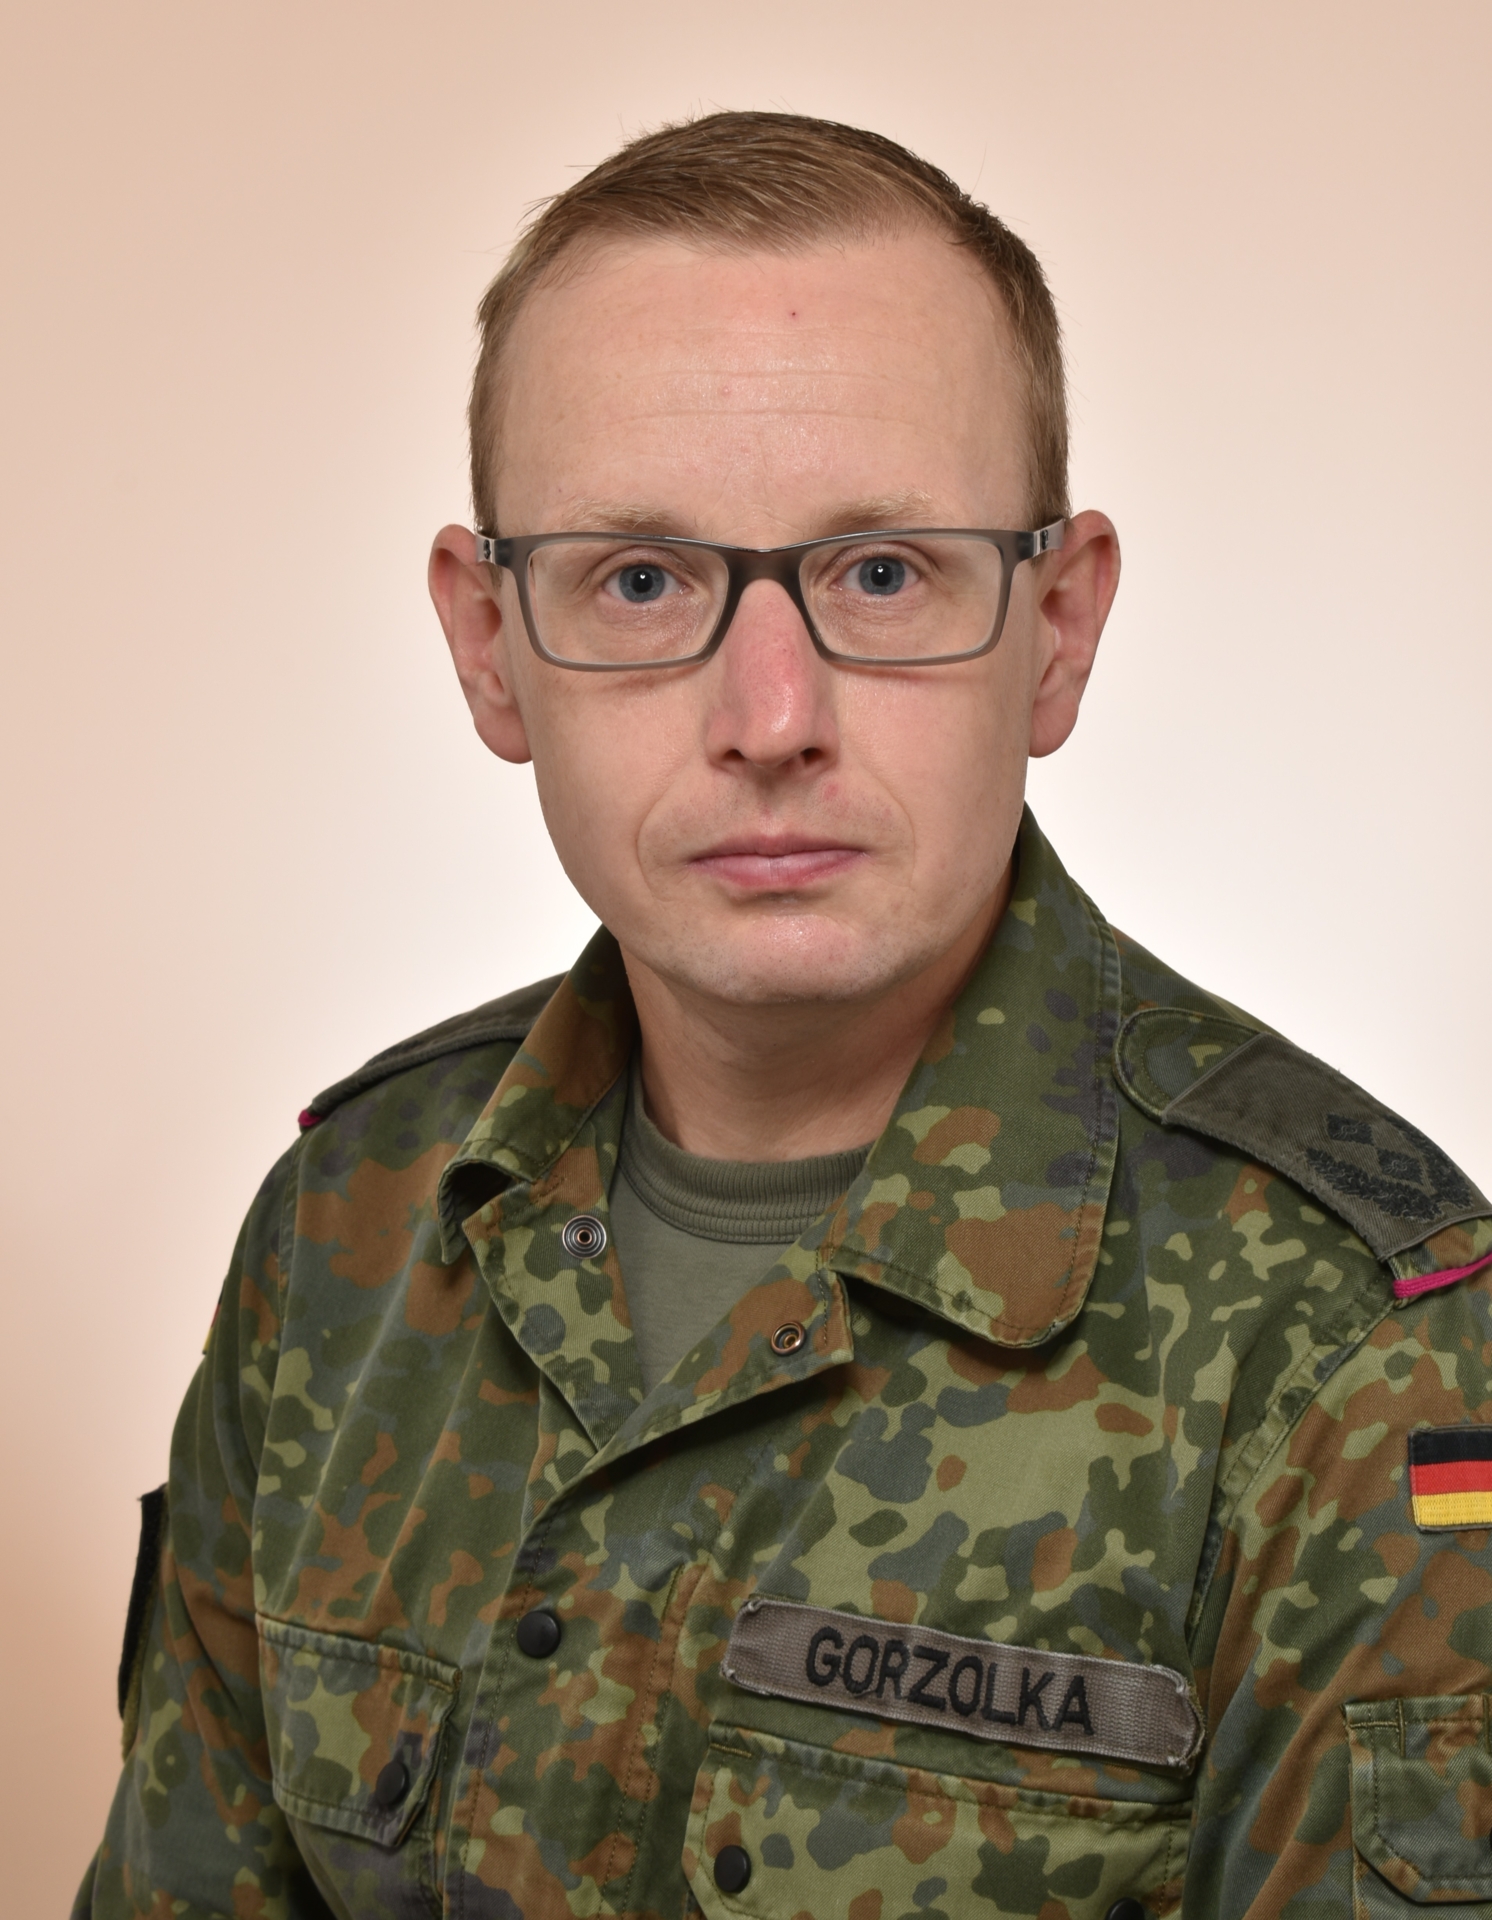 Festredner am Sonntag: Oberstleutnant Michael Gorzolka (Kommandeur des ABC-Abwehrbataillons Höxter)